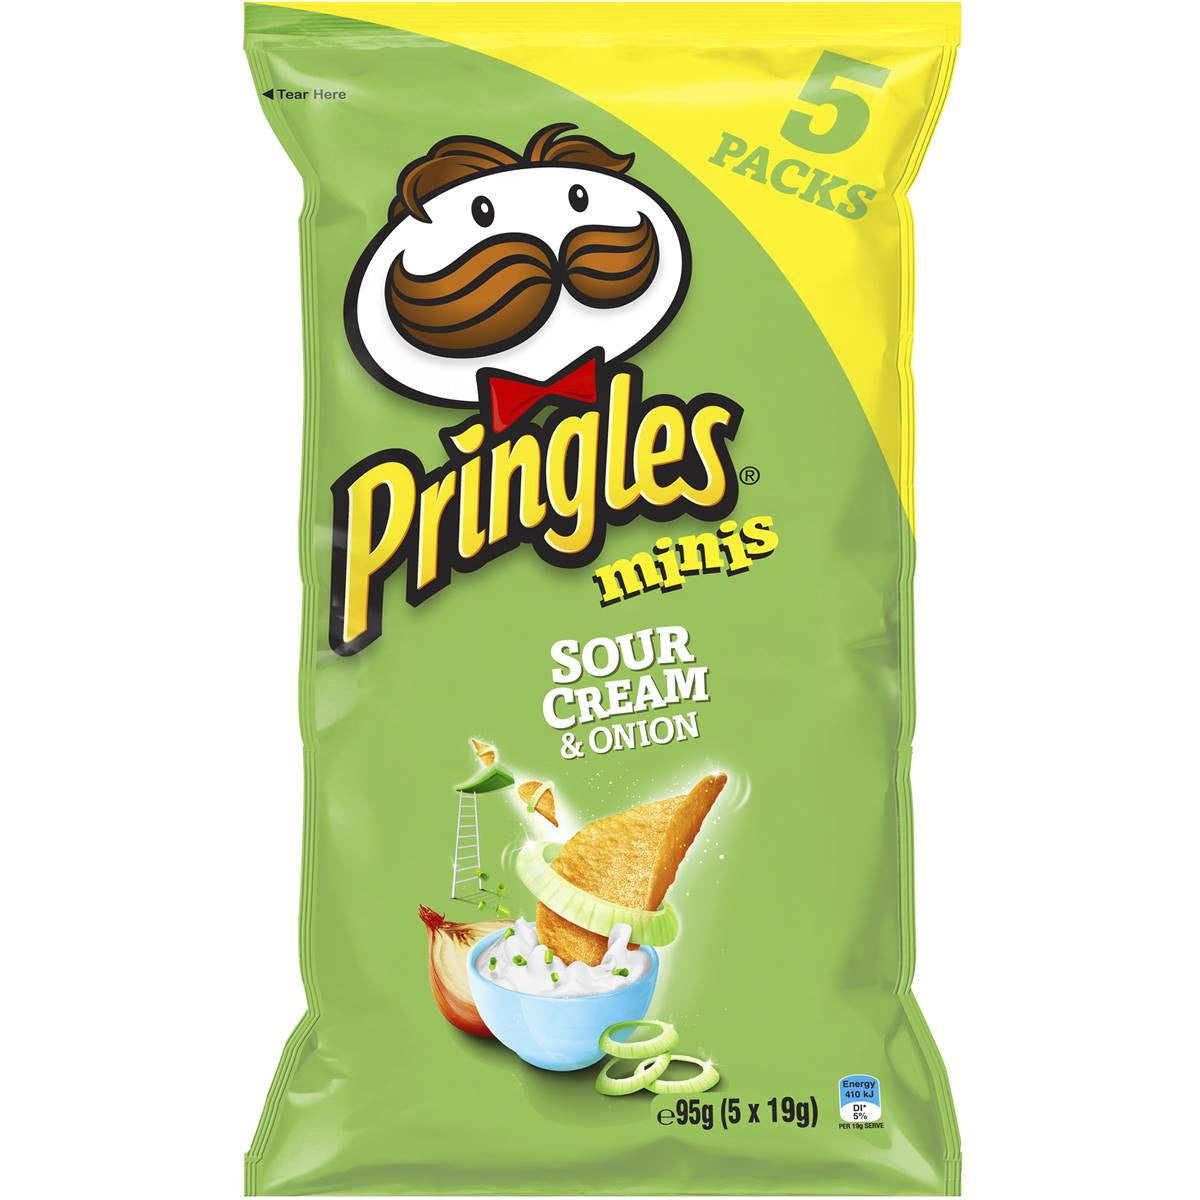 Pringles Minis Sour Cream & Onion 95g 5pk